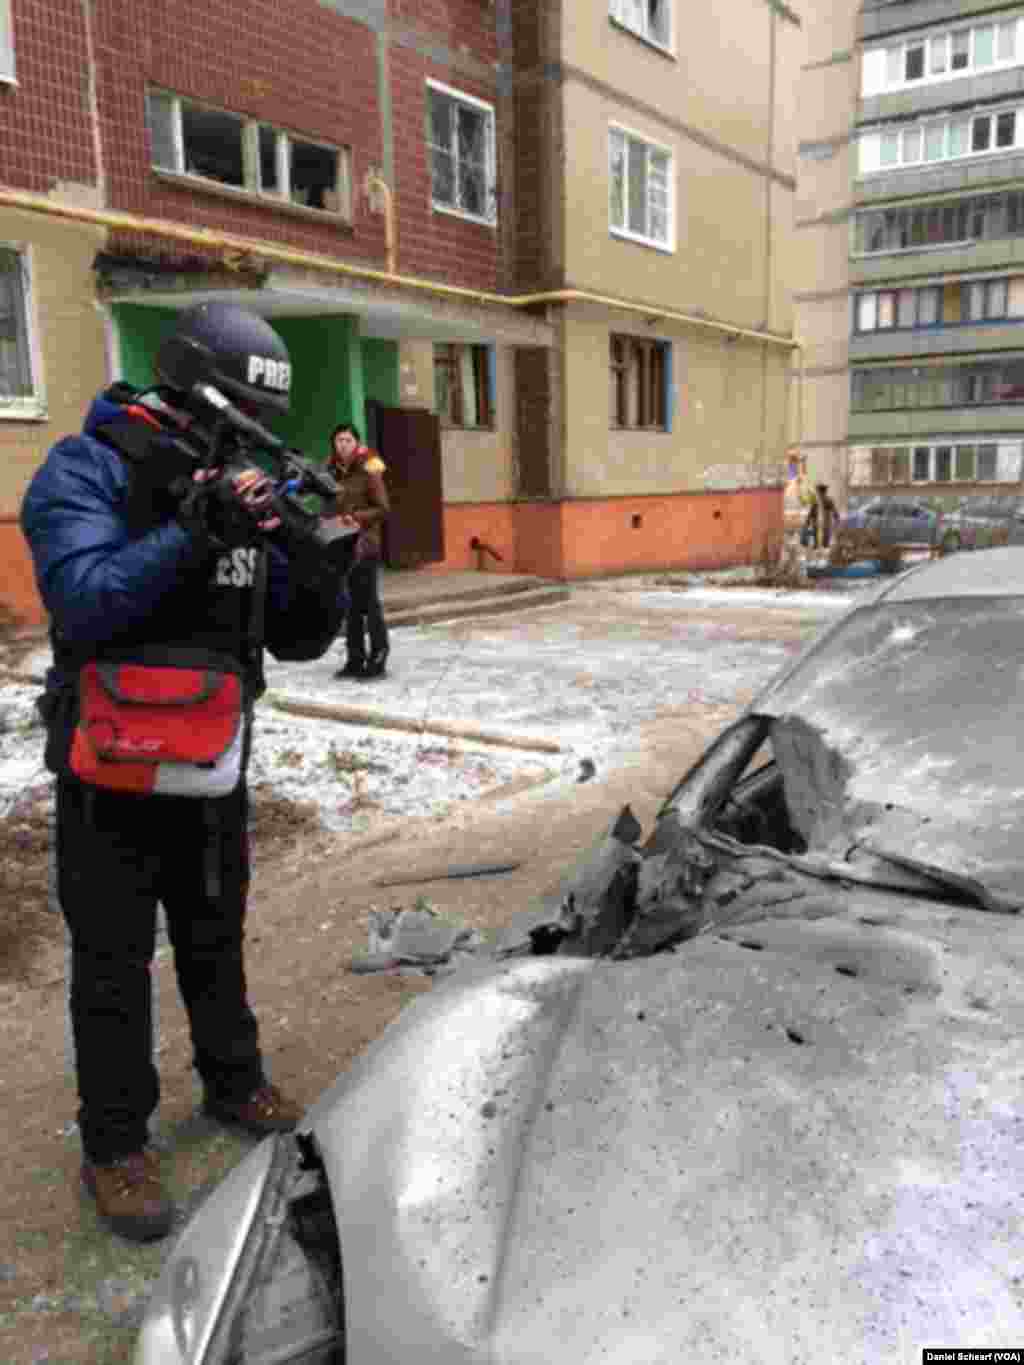 Damage from an artillery attack is seen in a residential area of Kramatorsk, eastern Ukraine, Feb. 10, 2015.